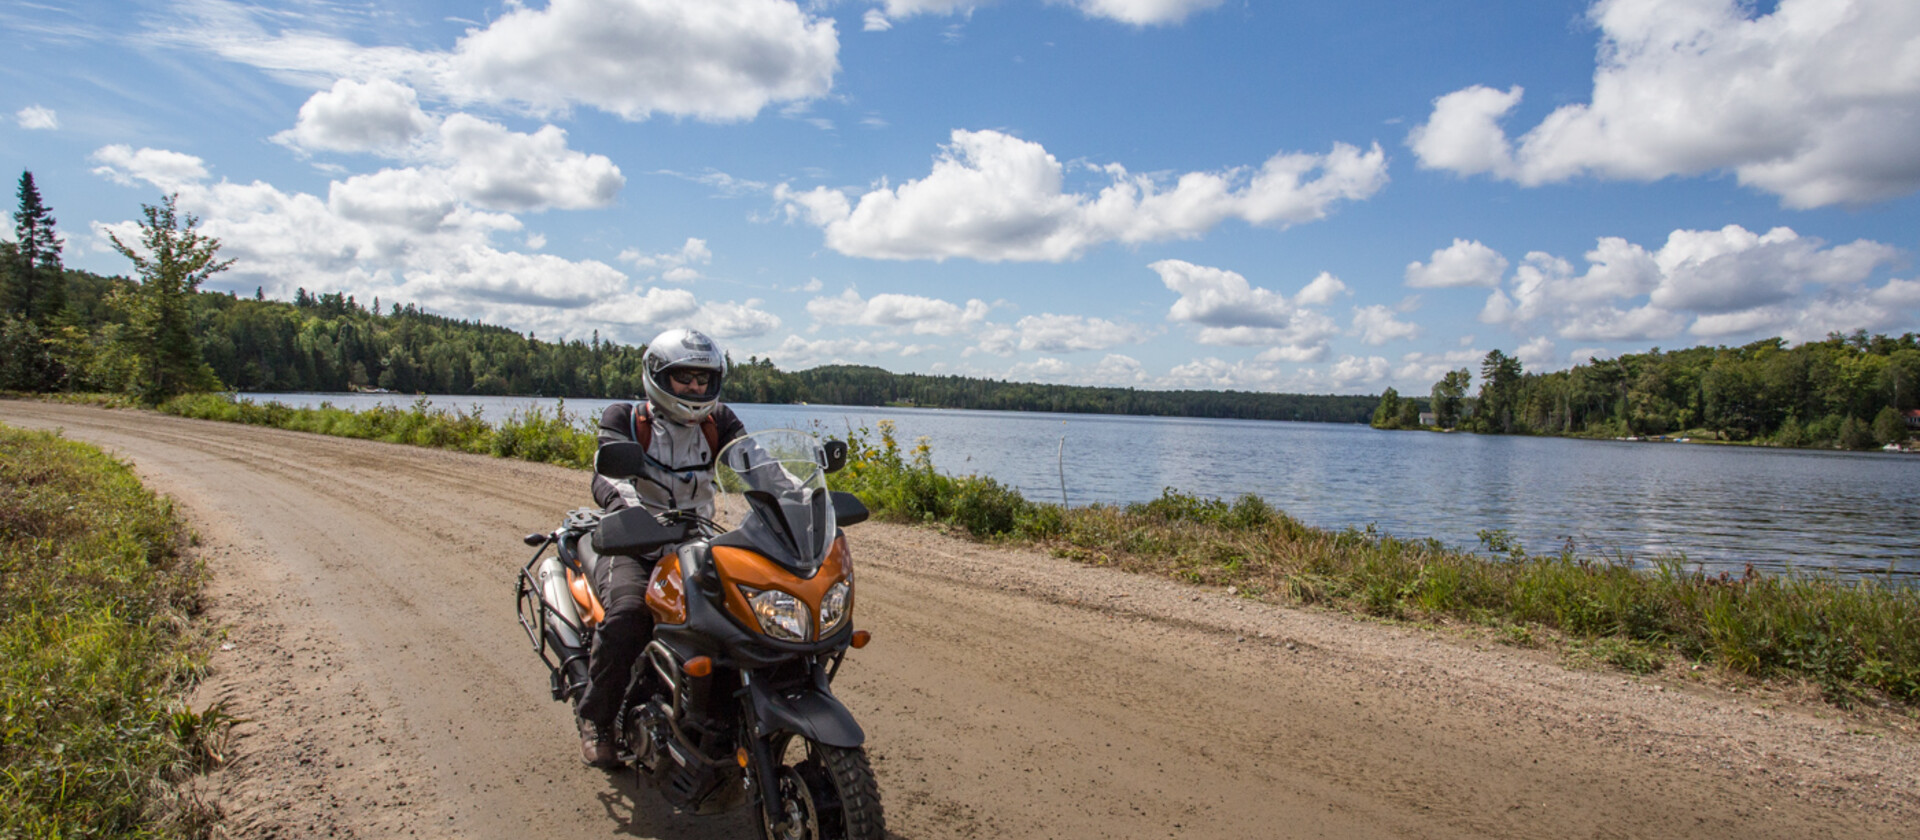 adventure motorcycle trips canada